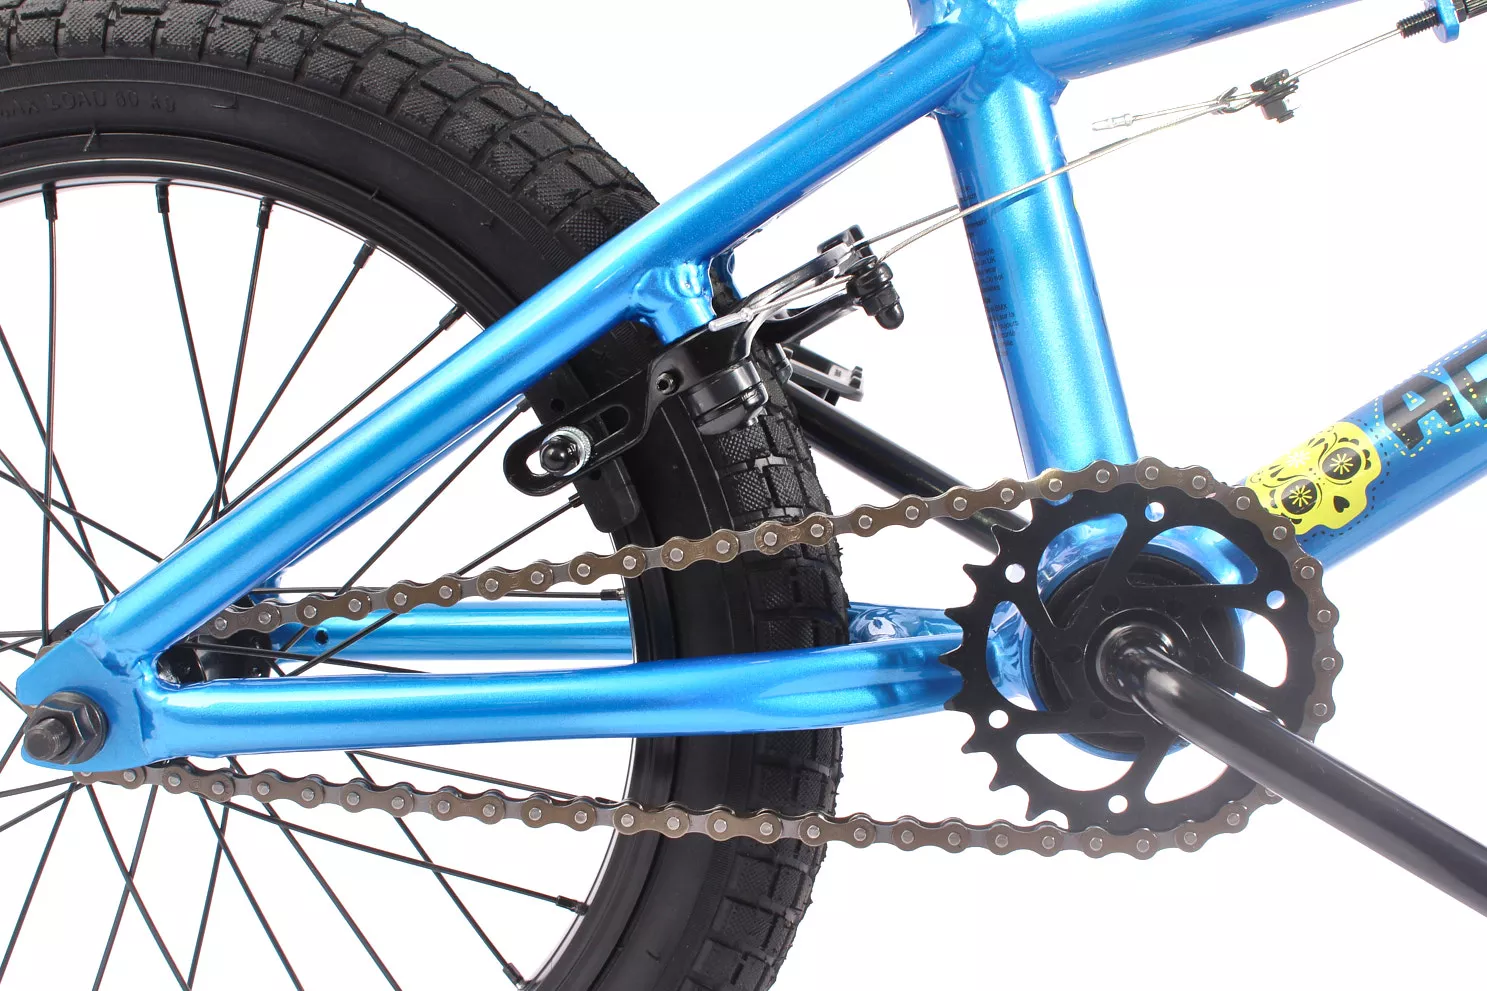 BMX bike alu KHE ARSENIC LL 16 inch 8.0kg